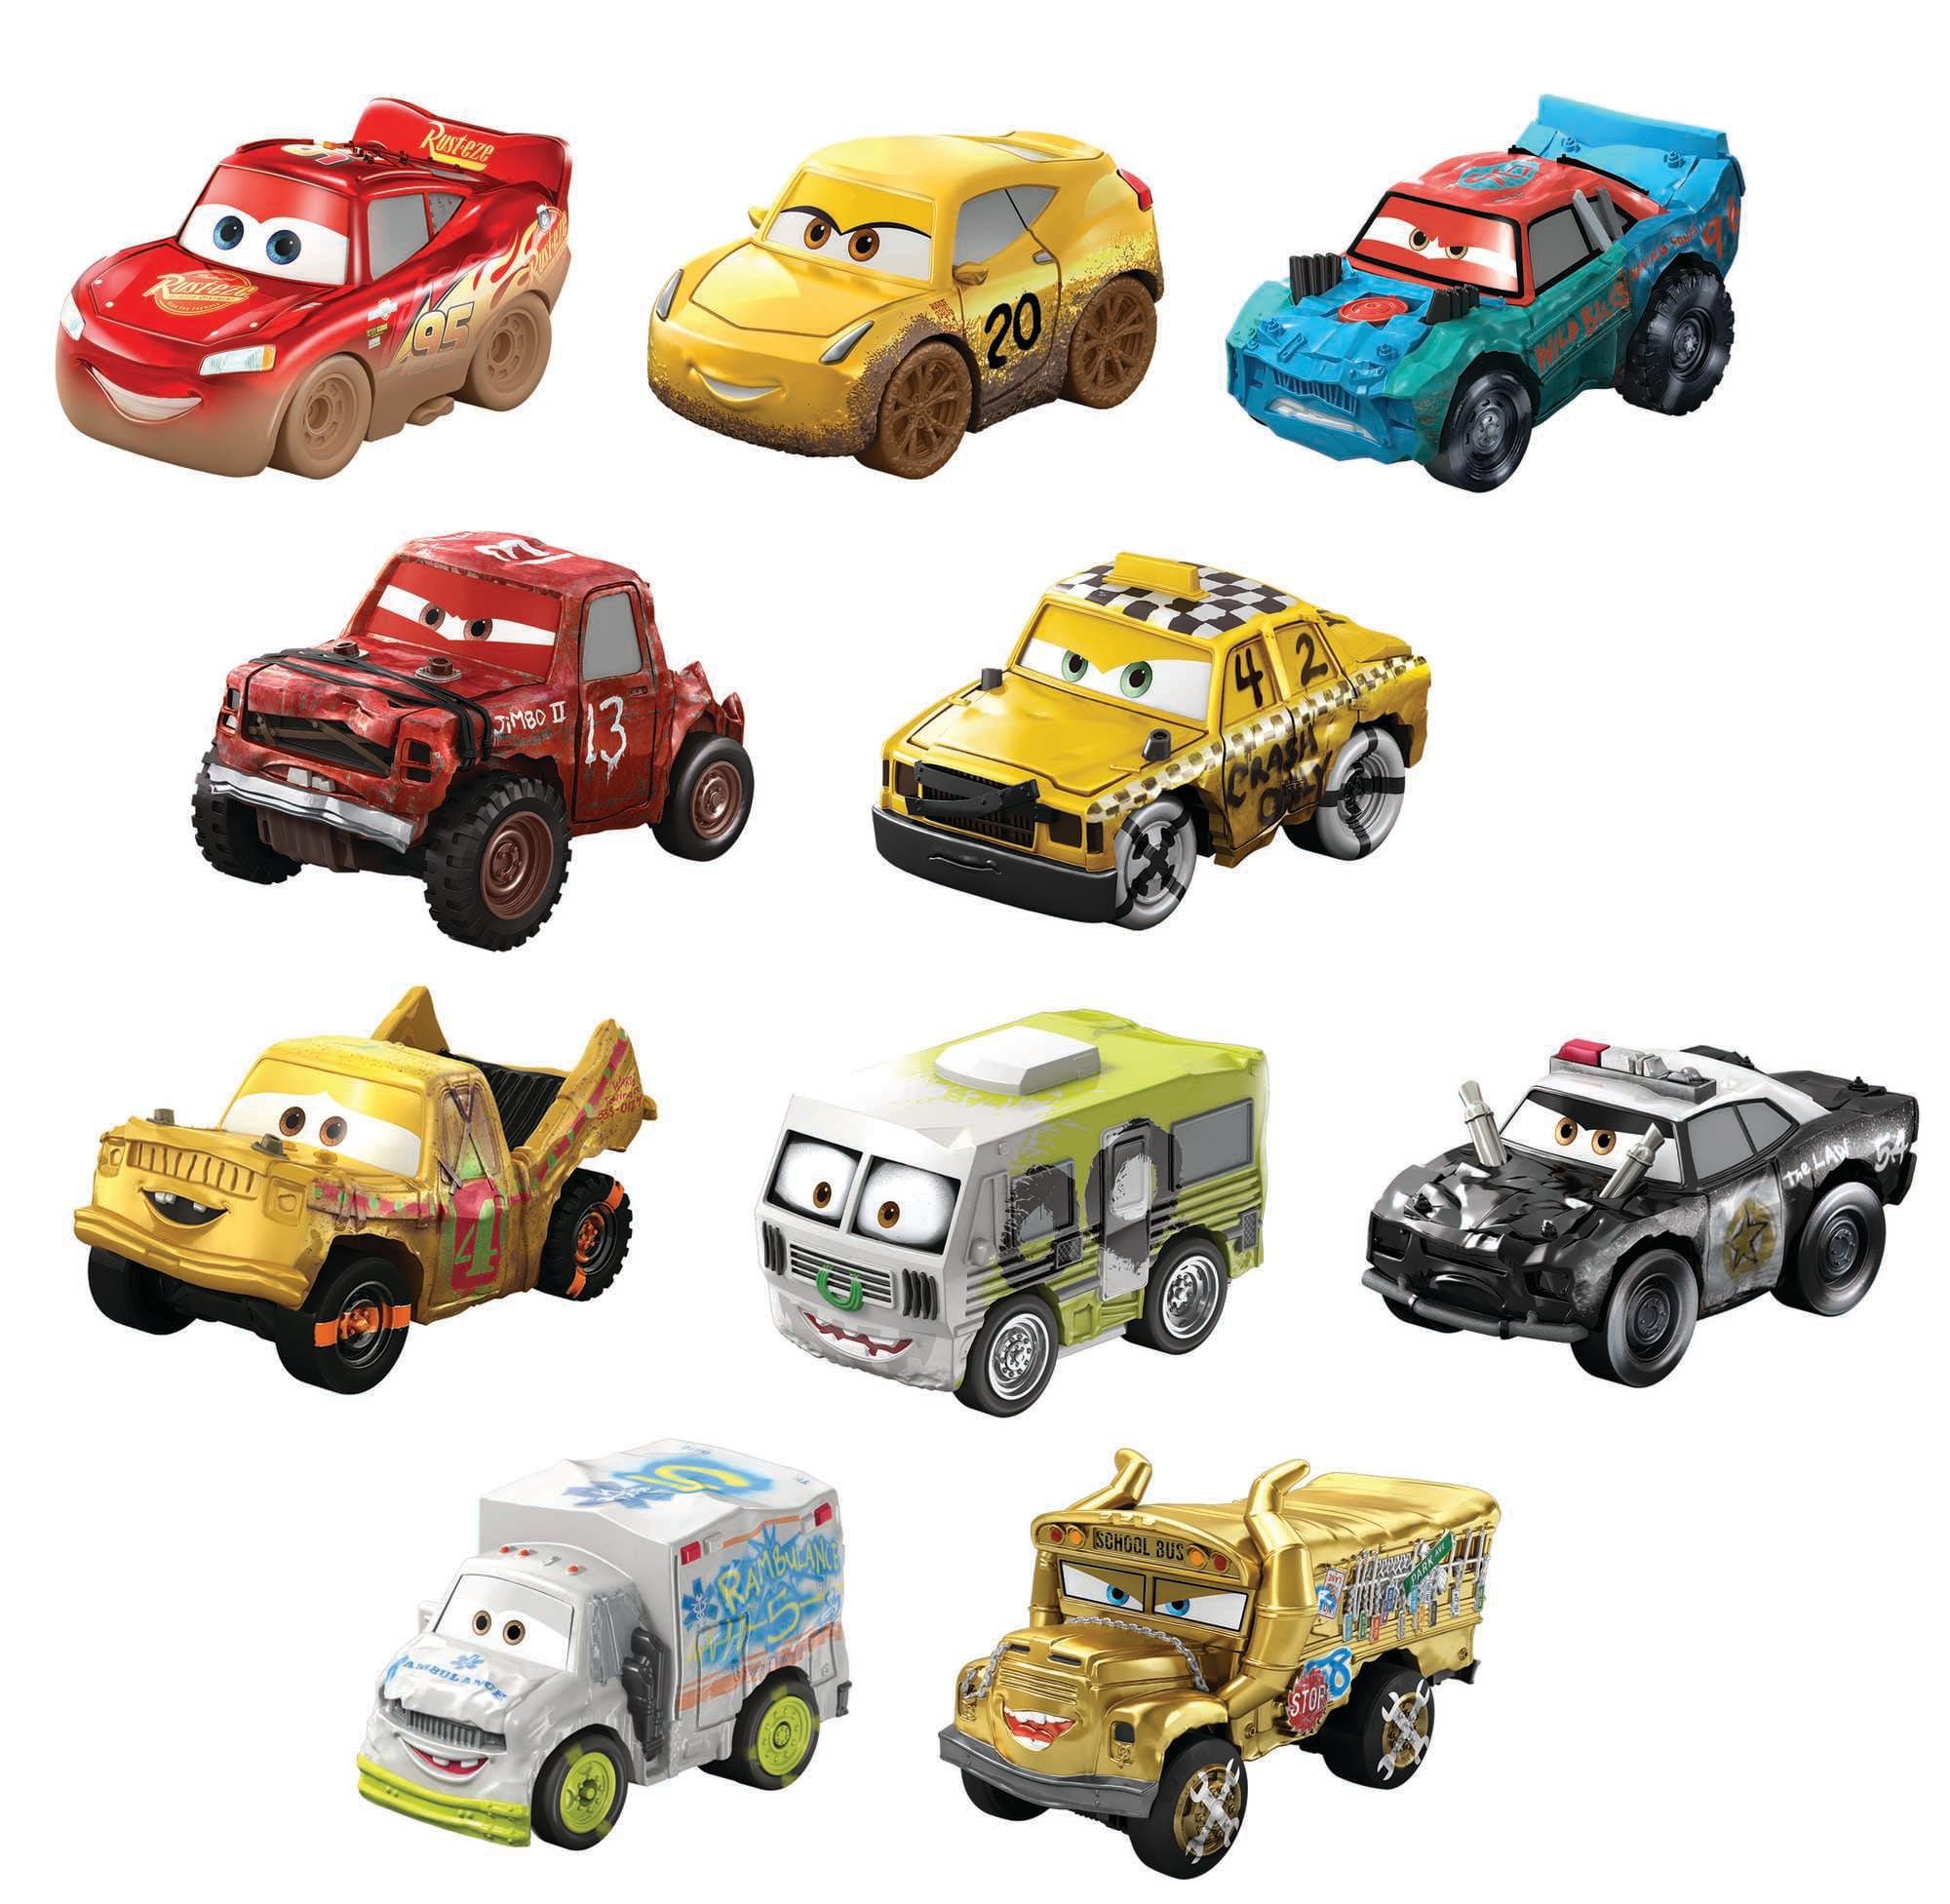 Disney Pixar Cars – Assortiment Coffrets 10 Véhicules Mini Racers, GKG08